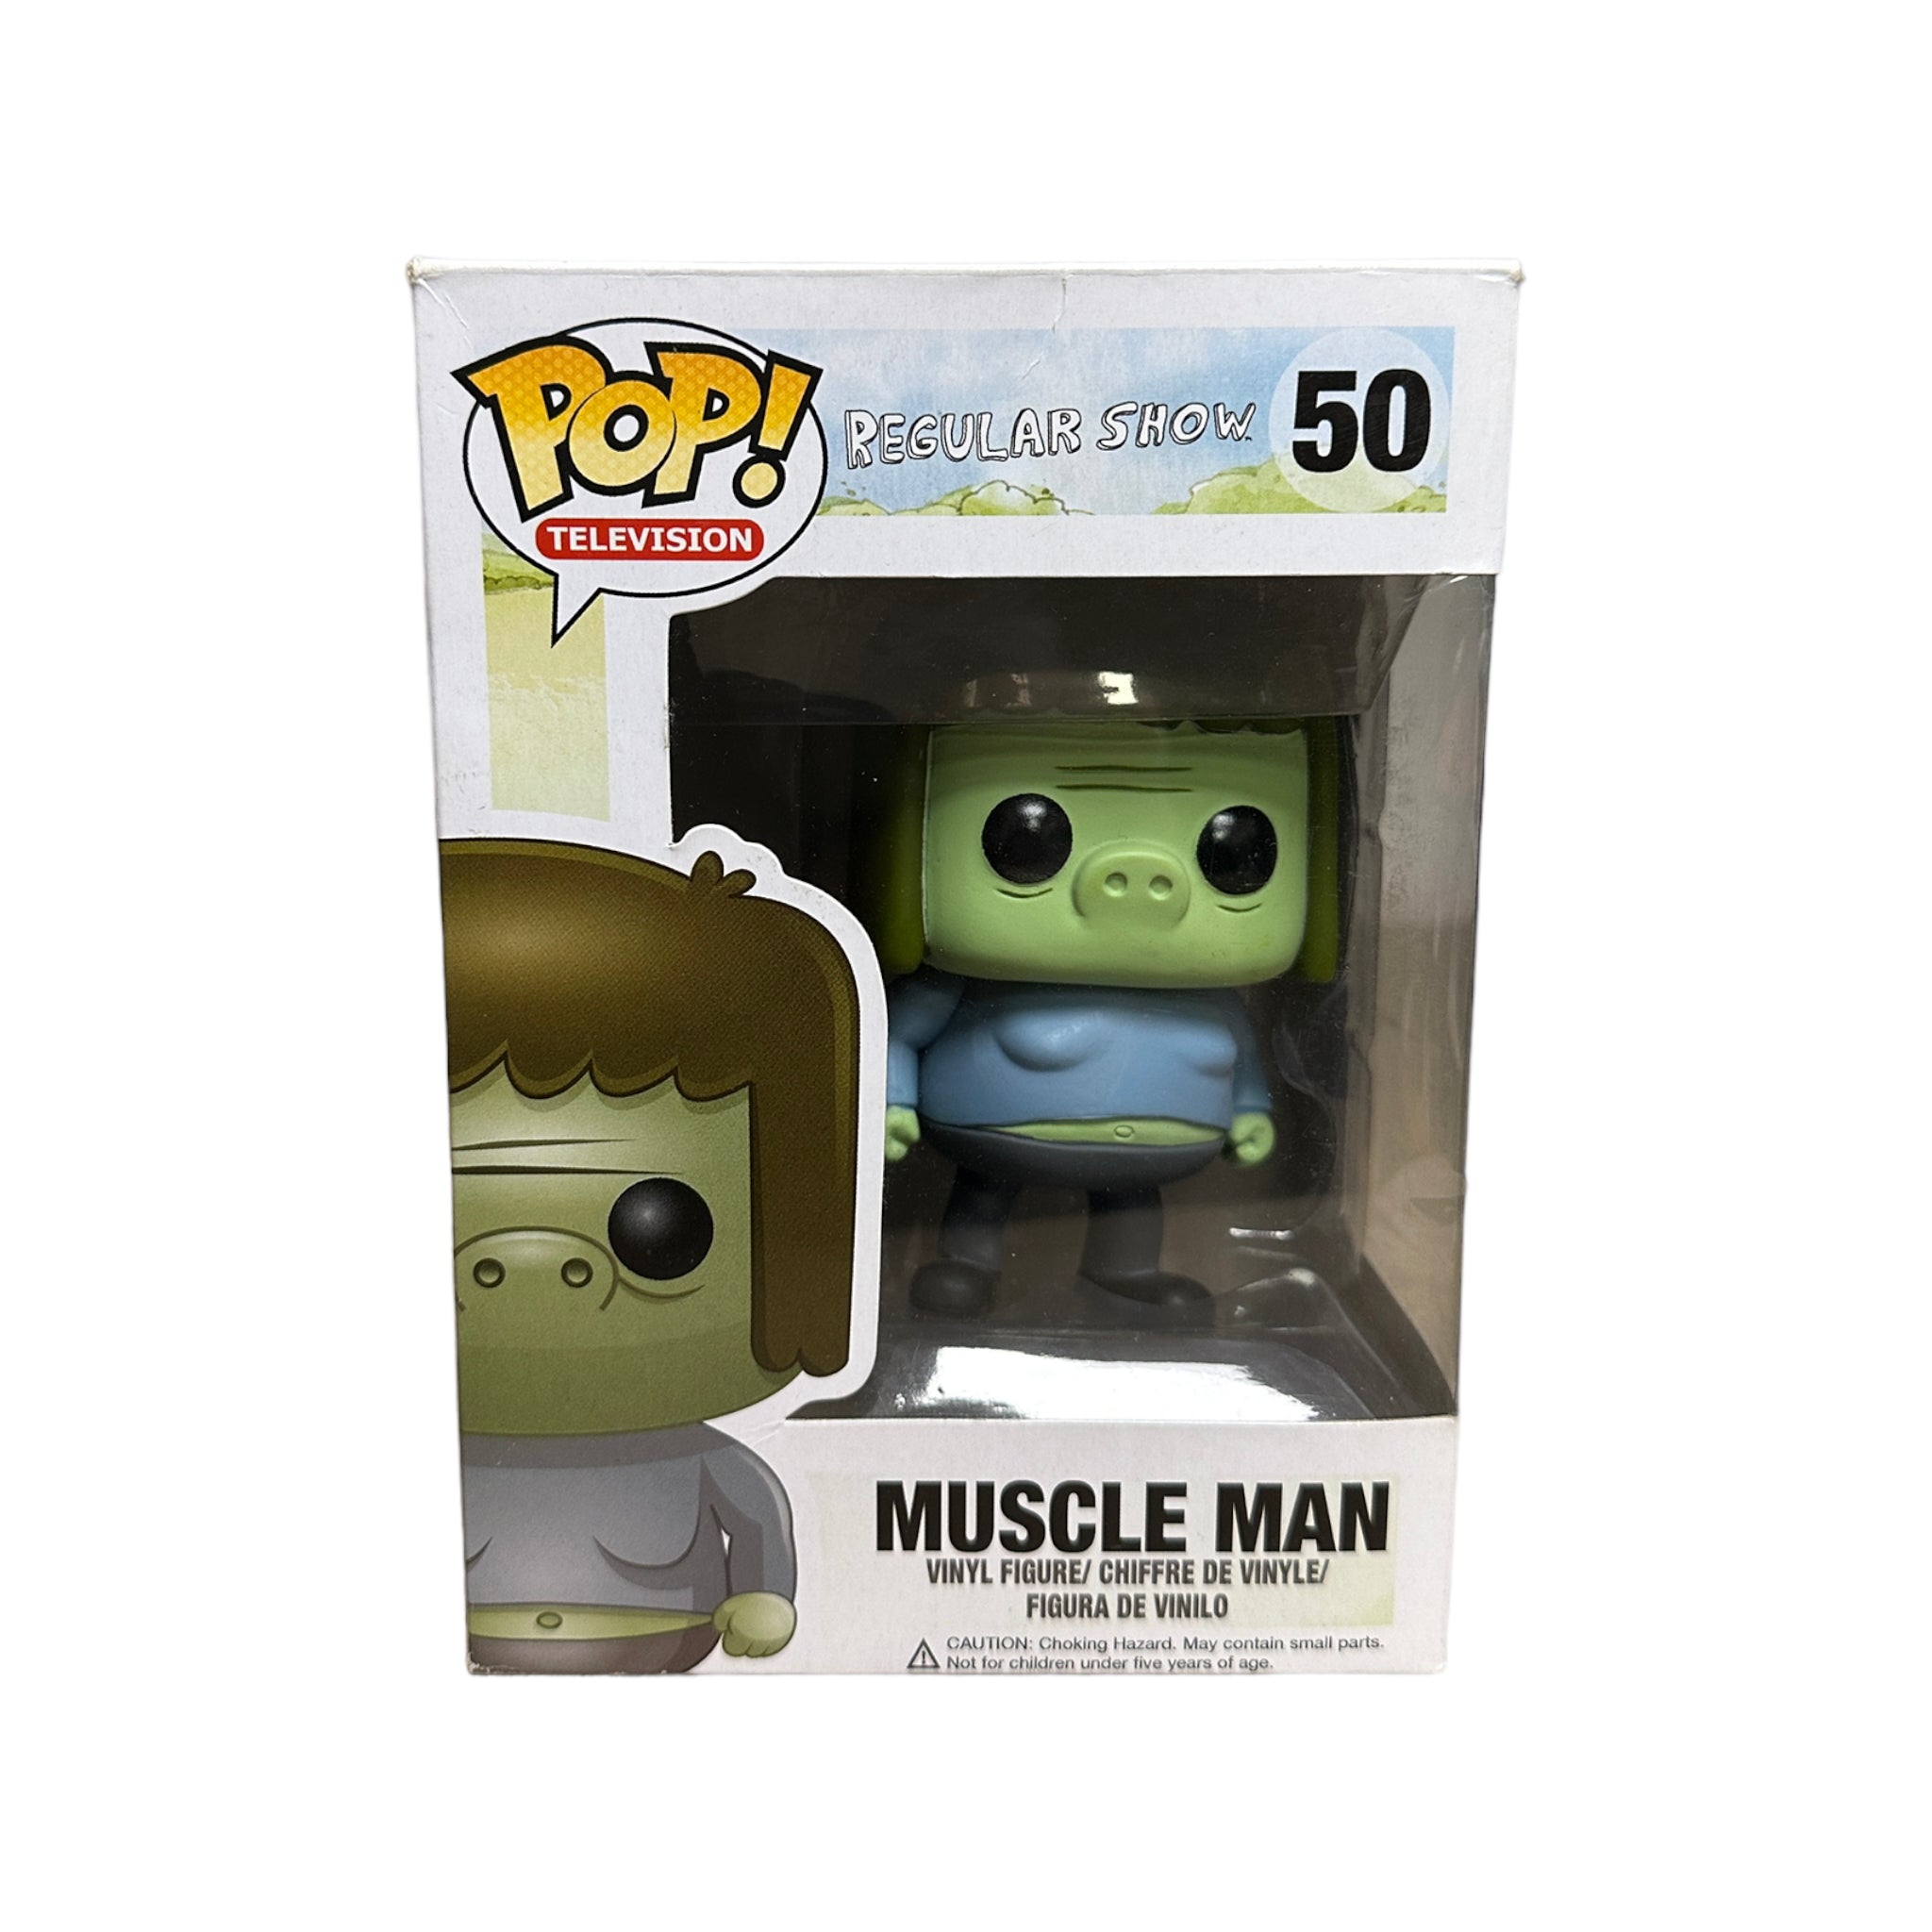 Muscle Man #50 Funko Pop! - Regular Show - 2013 Pop! - Condition 6/10